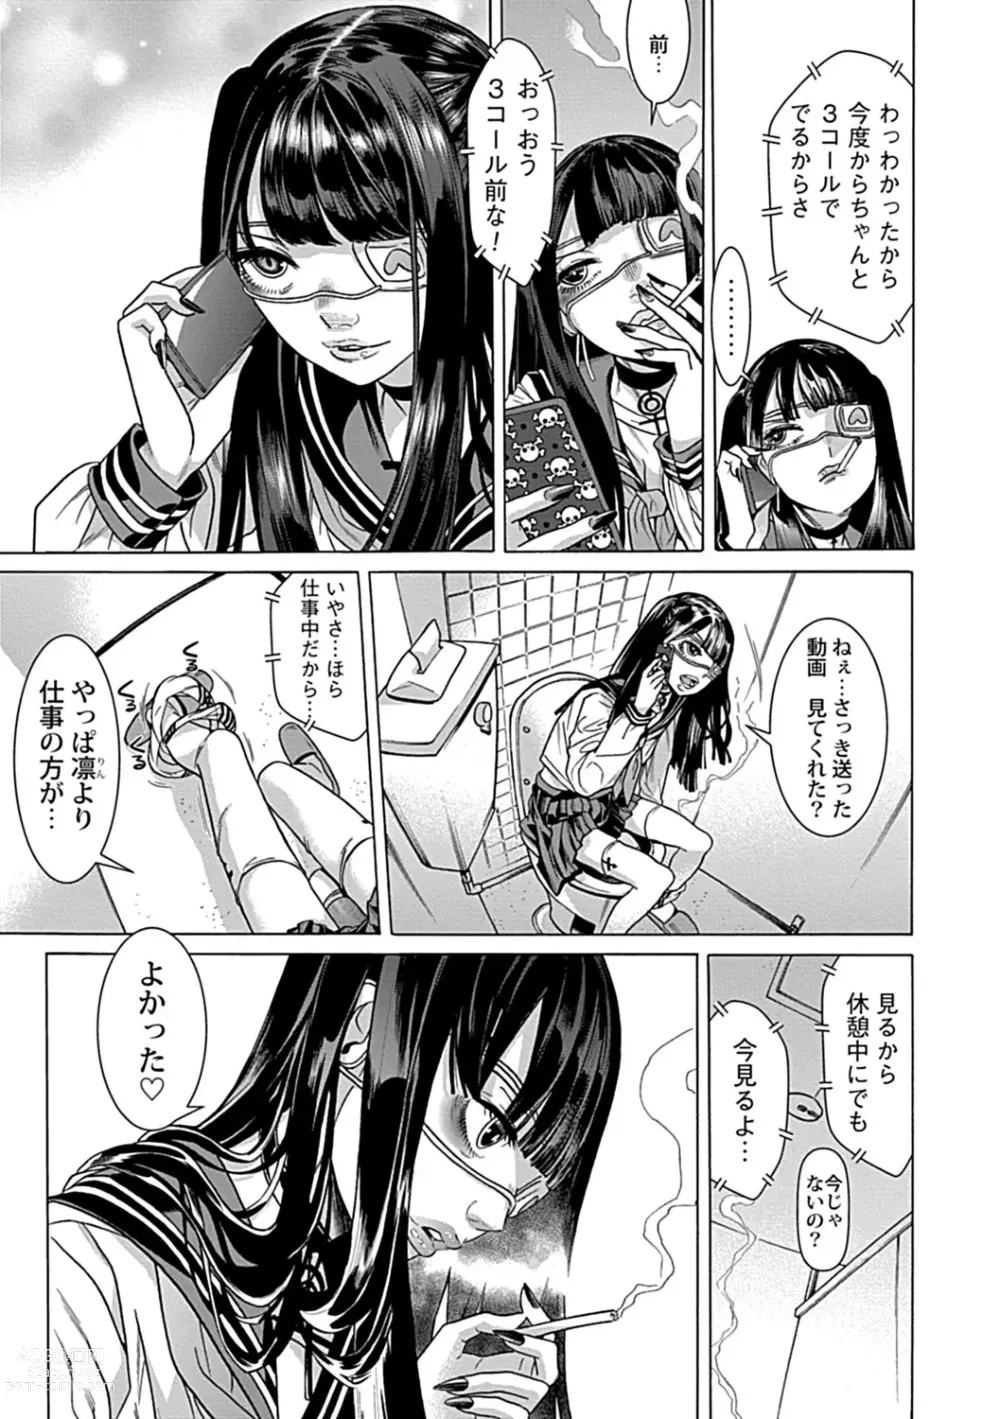 Page 5 of manga Kojiraseteru Kanojo?